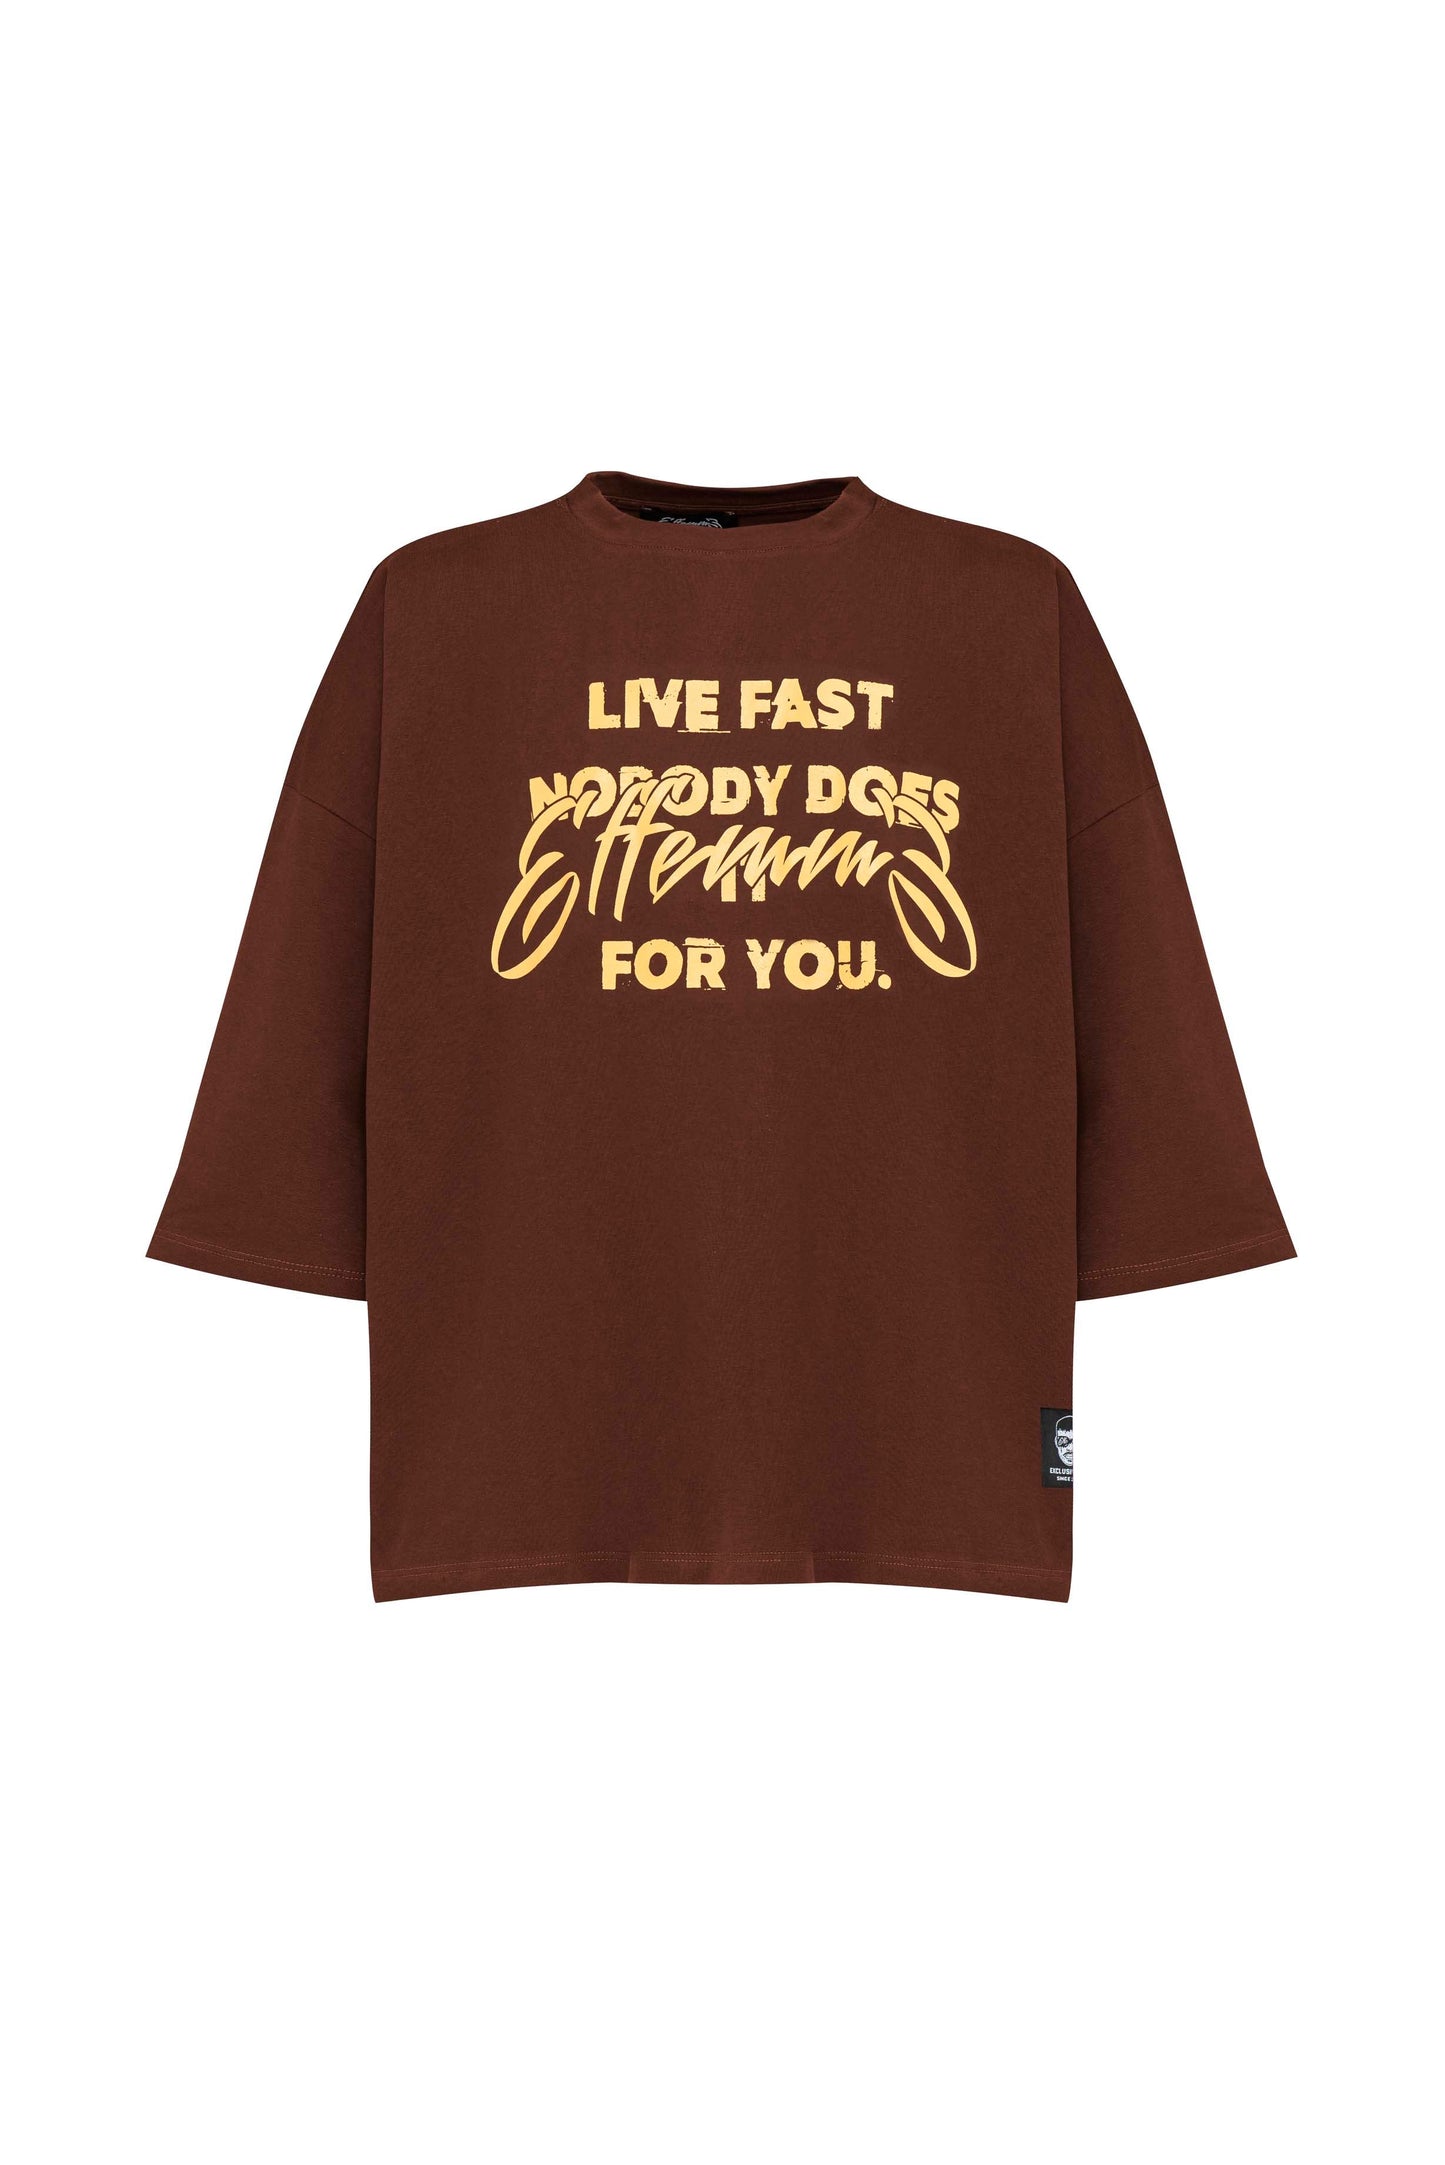 Live Fast Brown Tee